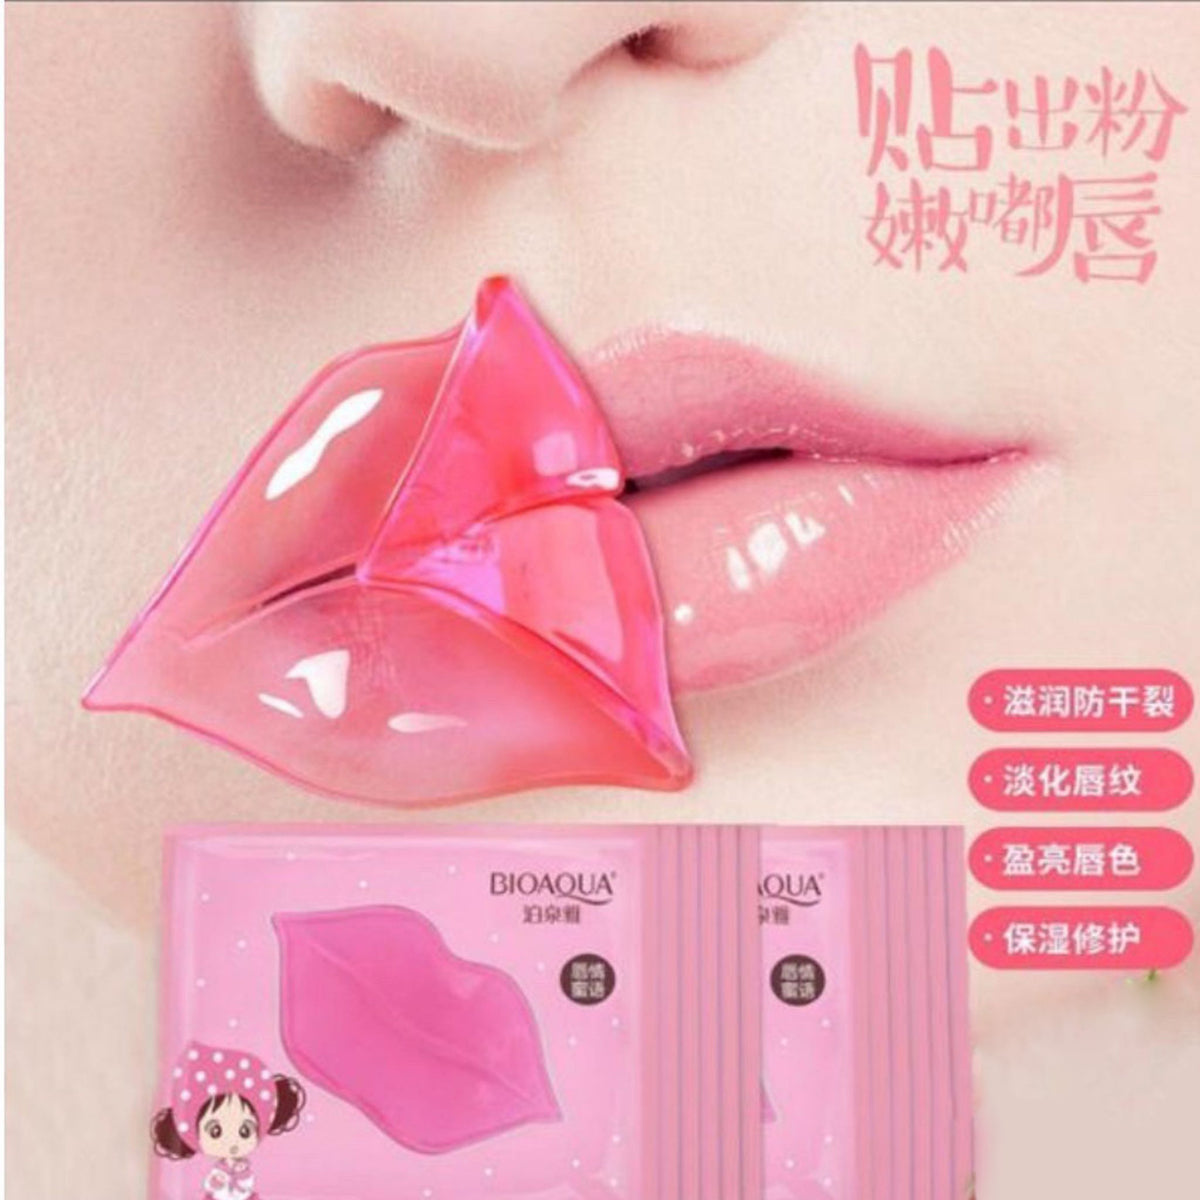 Bio Aqua Lip Mask Collagen Nourish Lips Membranes freeshipping - lasertag.pk